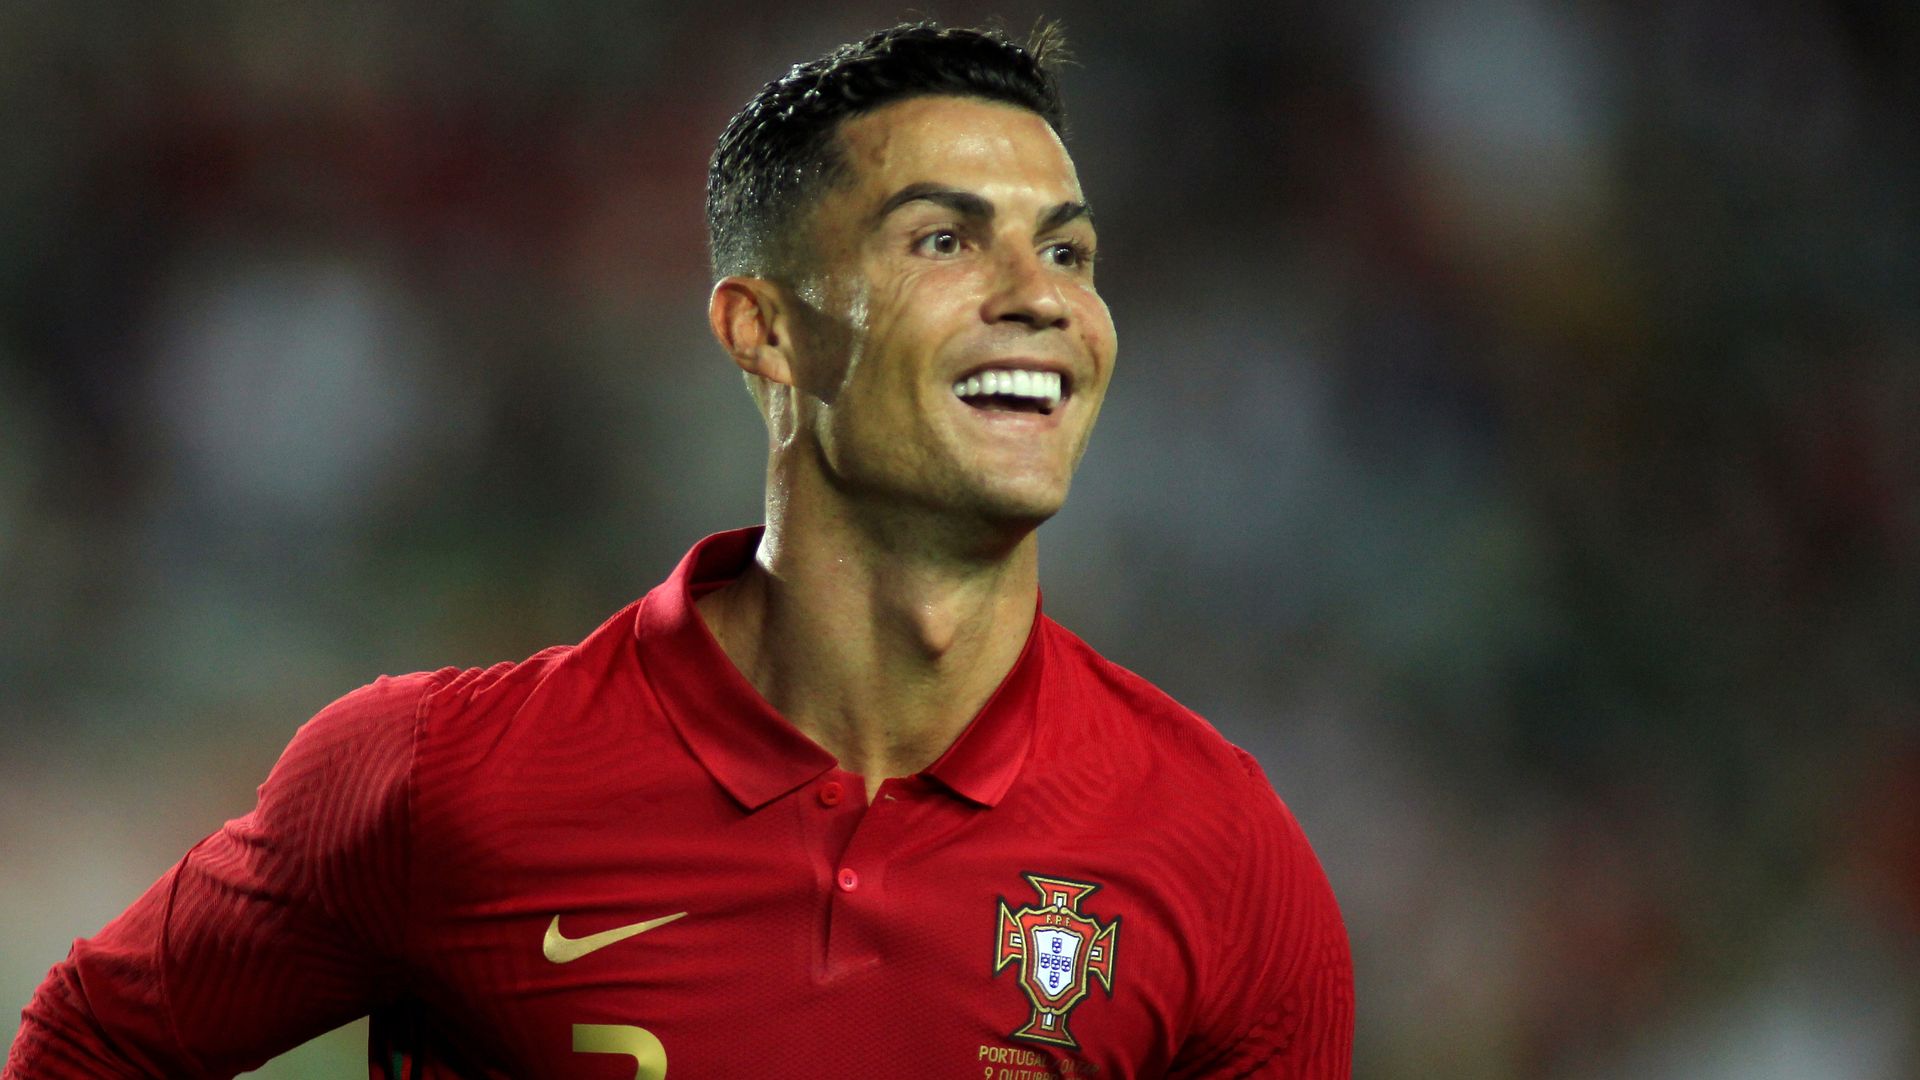 Ronaldo treble; Missiles halt Albania-Poland - round-up